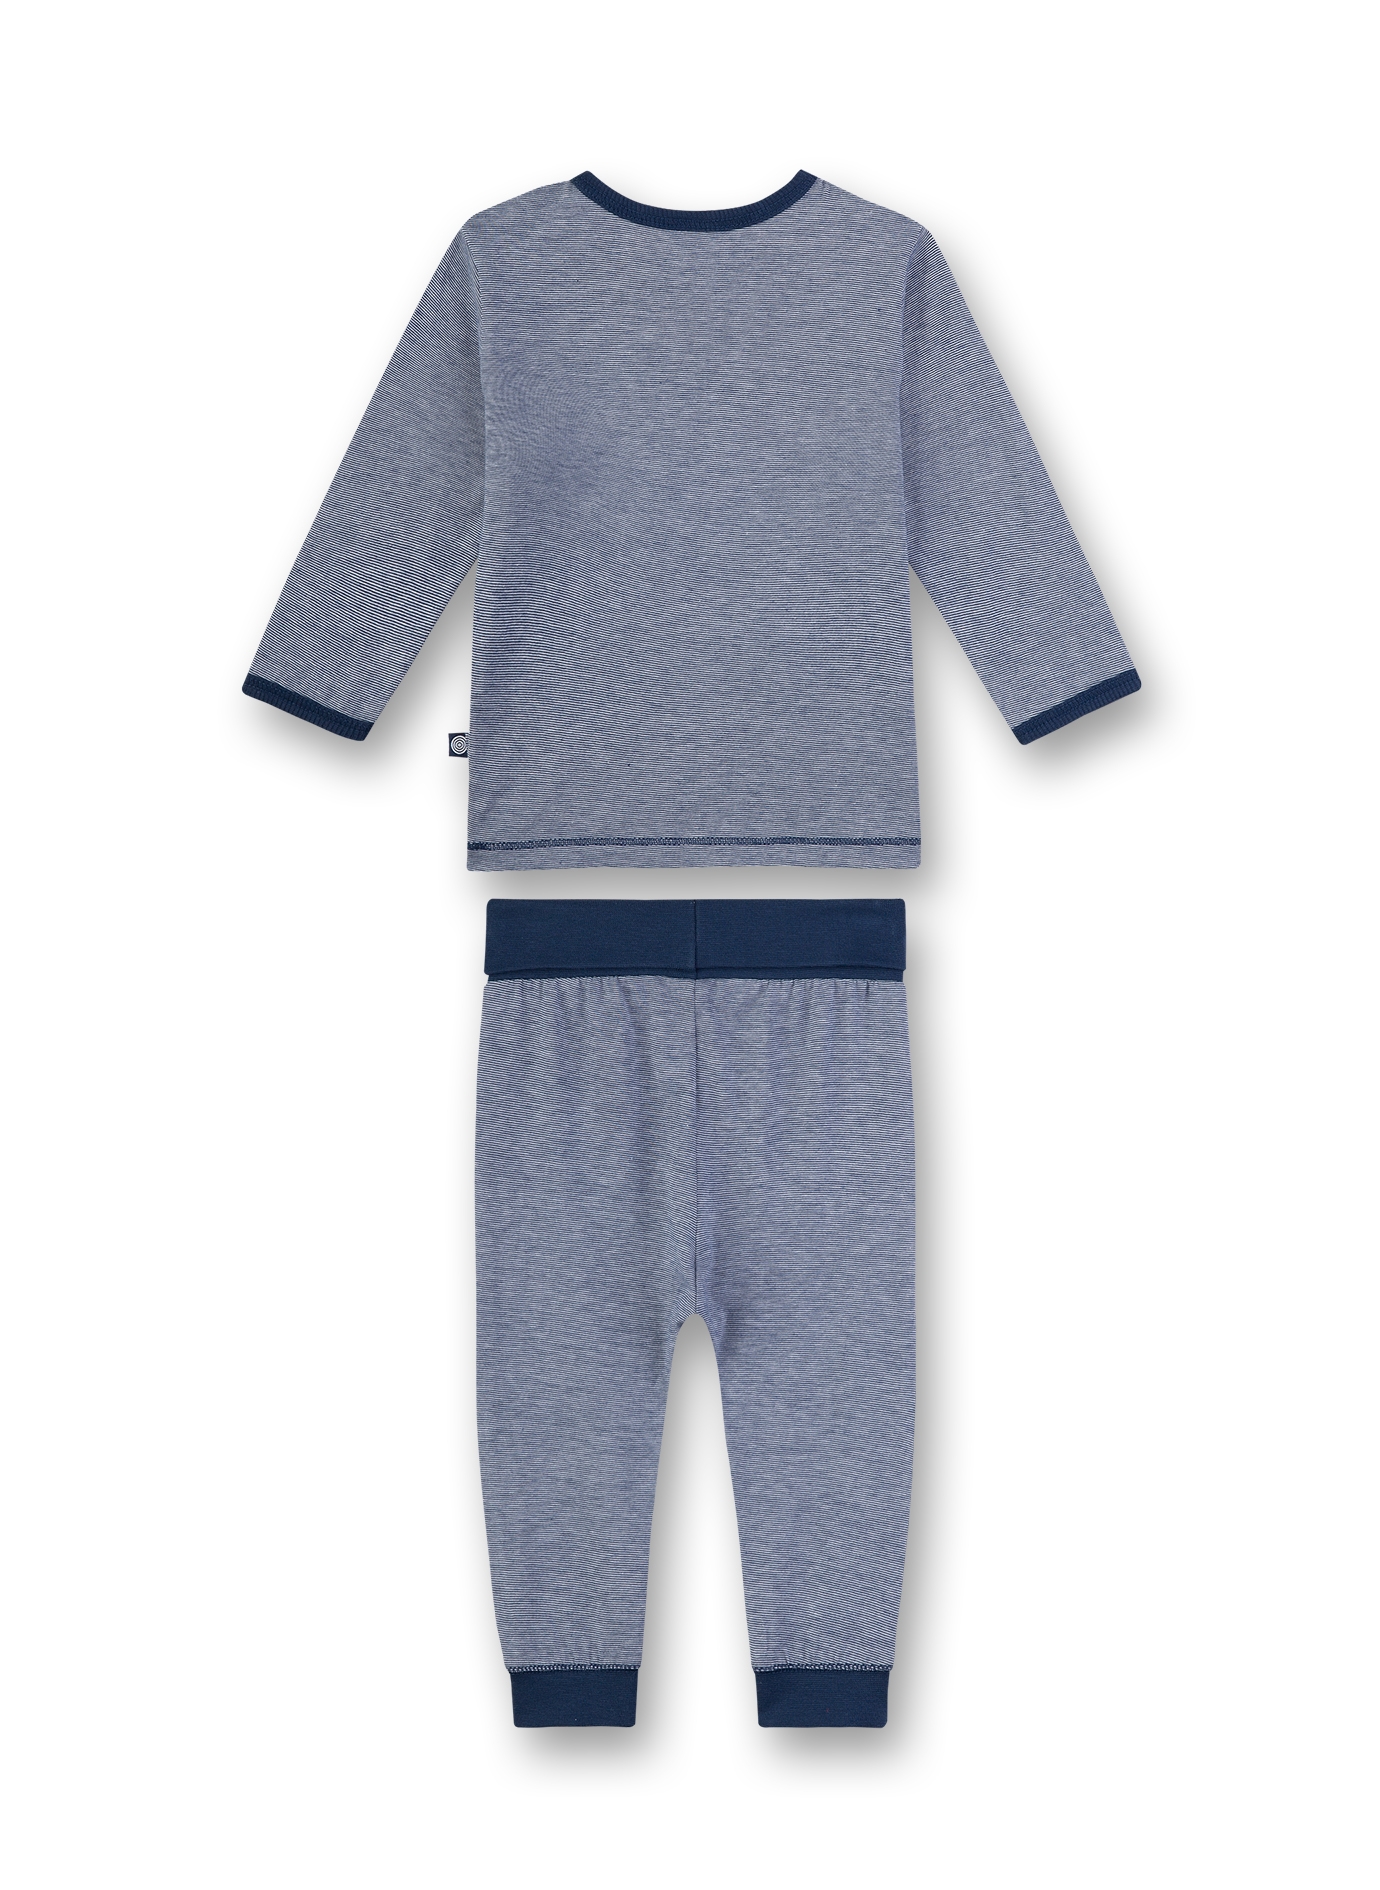 Jungen-Schlafanzug lang Blau-geringelt Bear